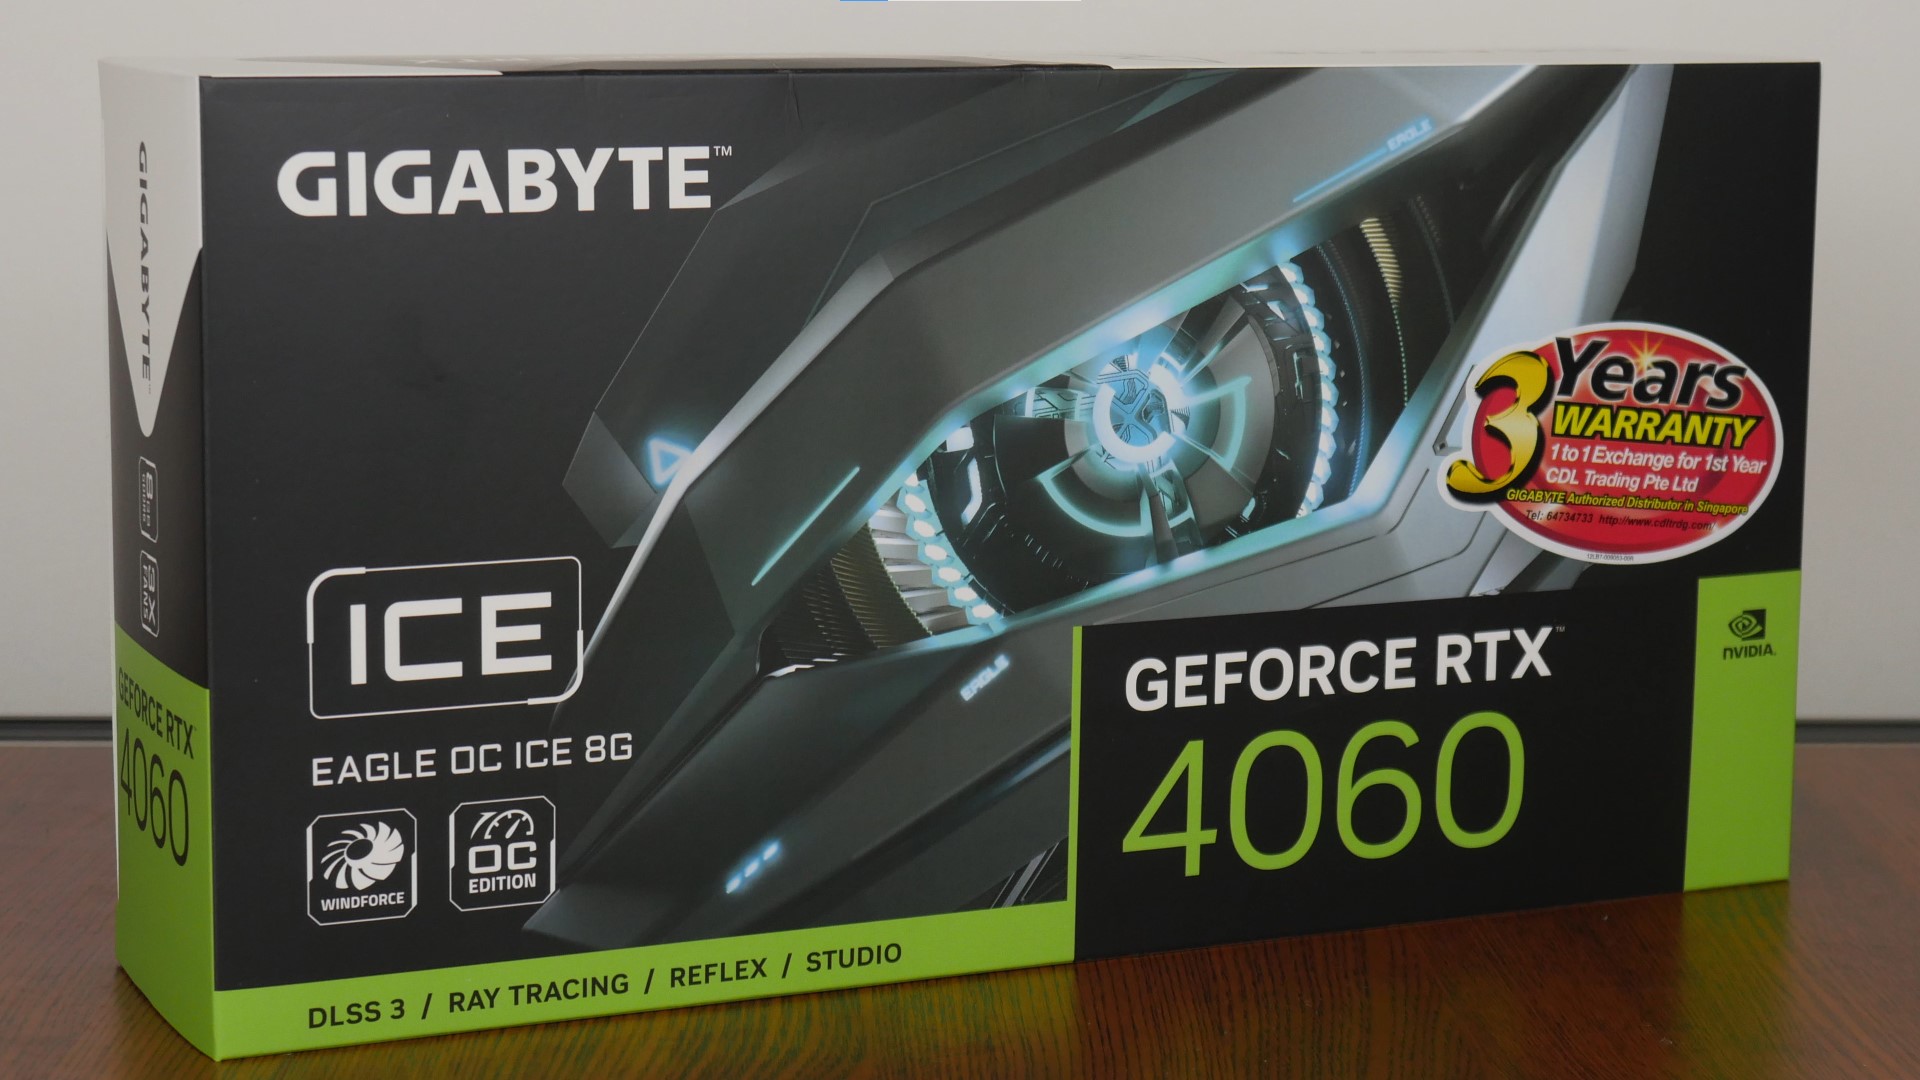 Gigabyte GeForce RTX 4060 EAGLE OC ICE 8G Packaging (Front)